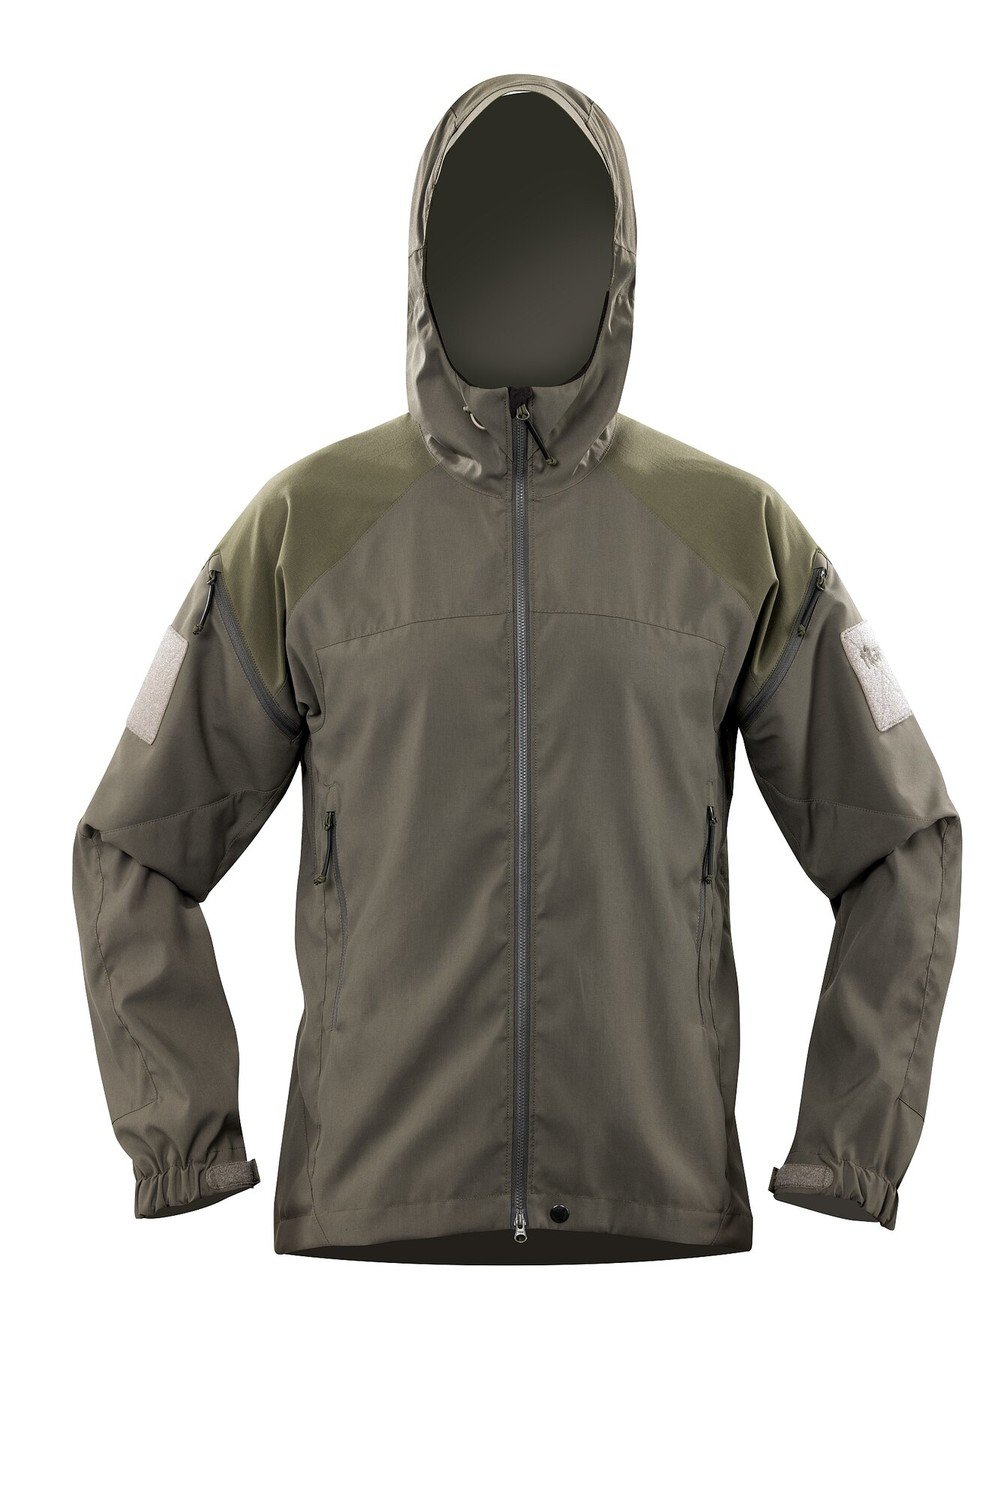 Bunda Operator Tilak Military Gear® – Khaki (Barva: Khaki, Velikost: S)